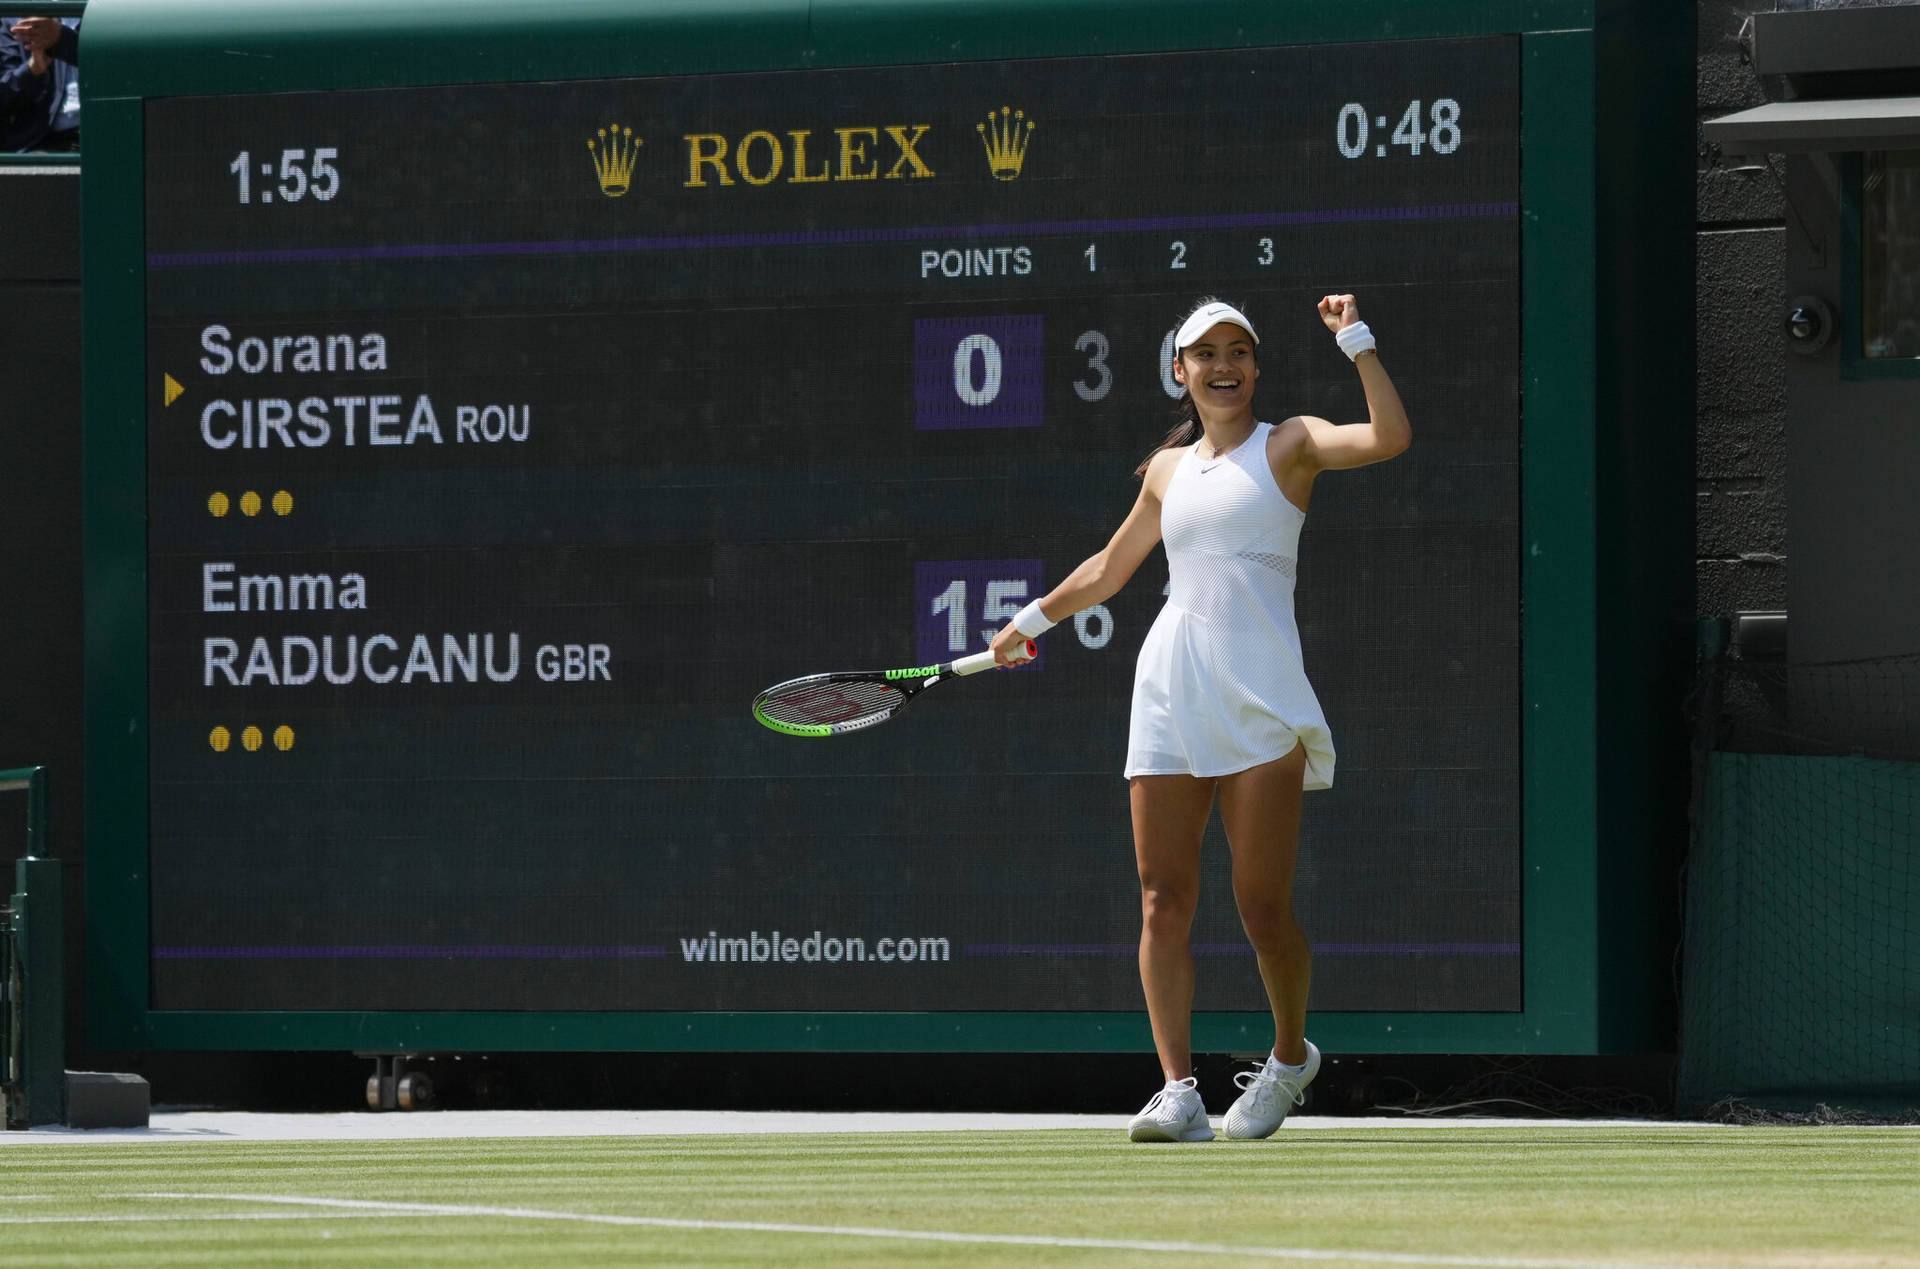 Emma Raducanu Scoring A Victory On The Tennis Court. Background